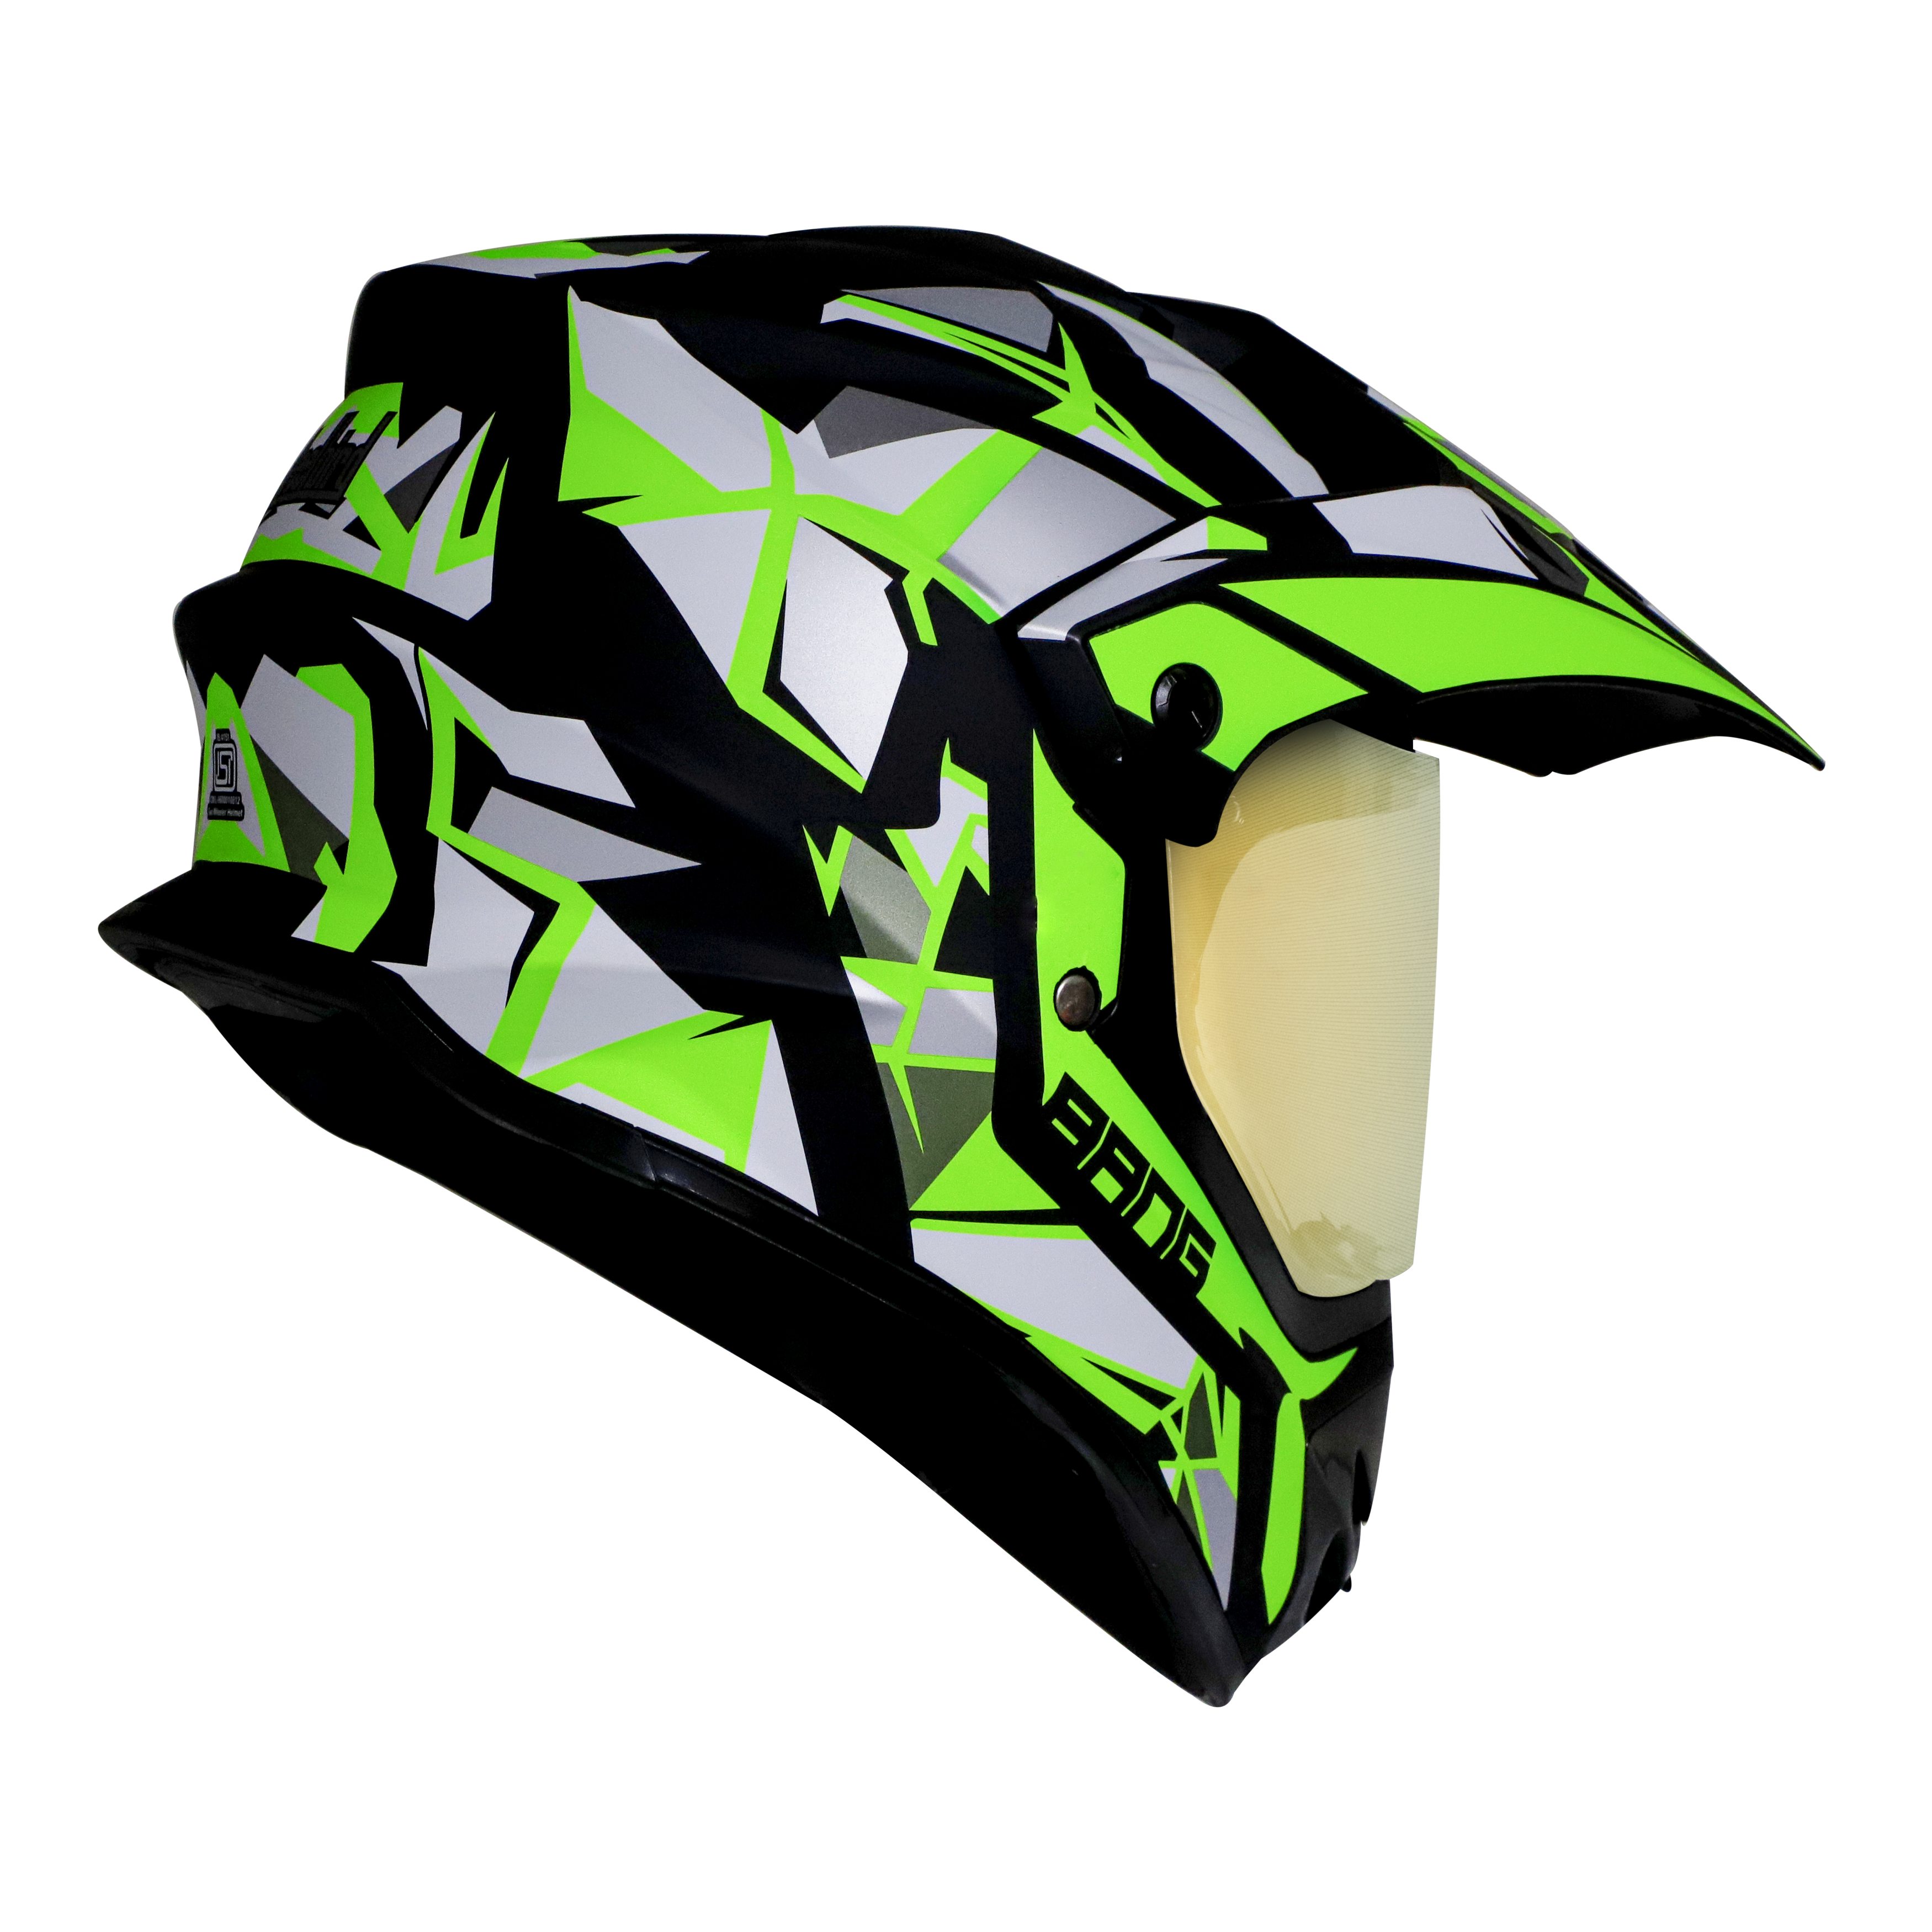 Steelbird Off Road Bang KTN ISI Certified ABS Material Shell Motocross Helmet (Matt Black Neon With Chrome Gold Visor)